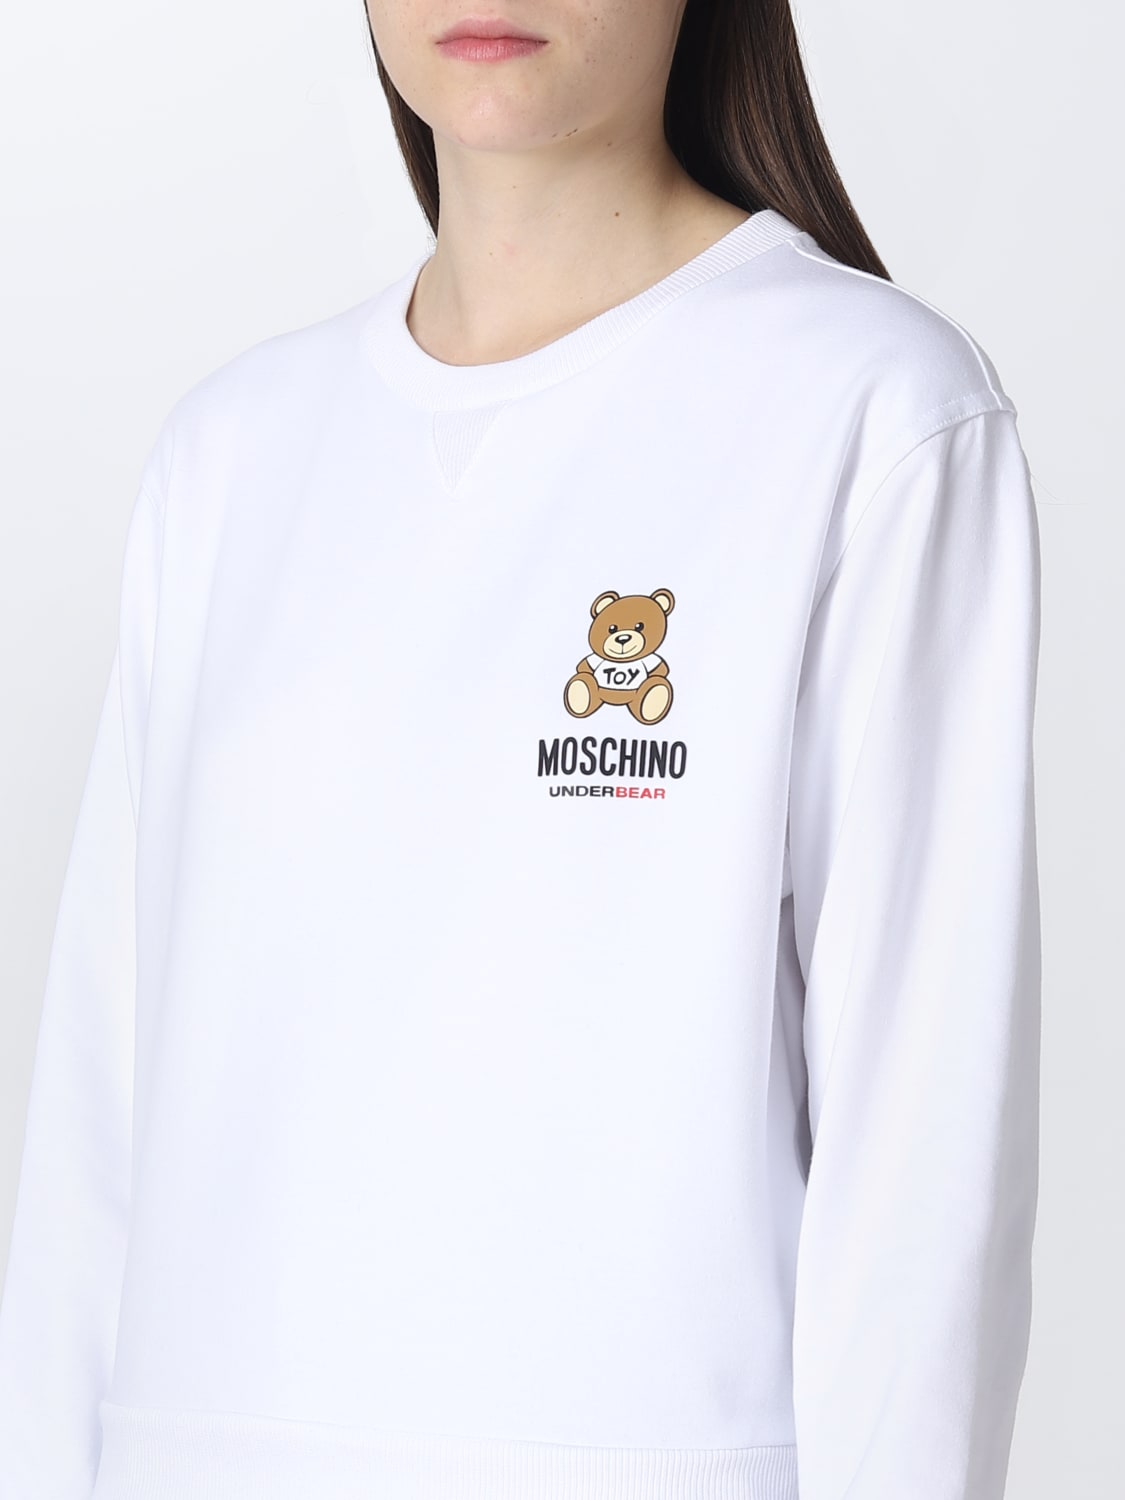 Moschino Underwear Outlet: sweatshirt for woman - White  Moschino Underwear  sweatshirt A17139004 online at